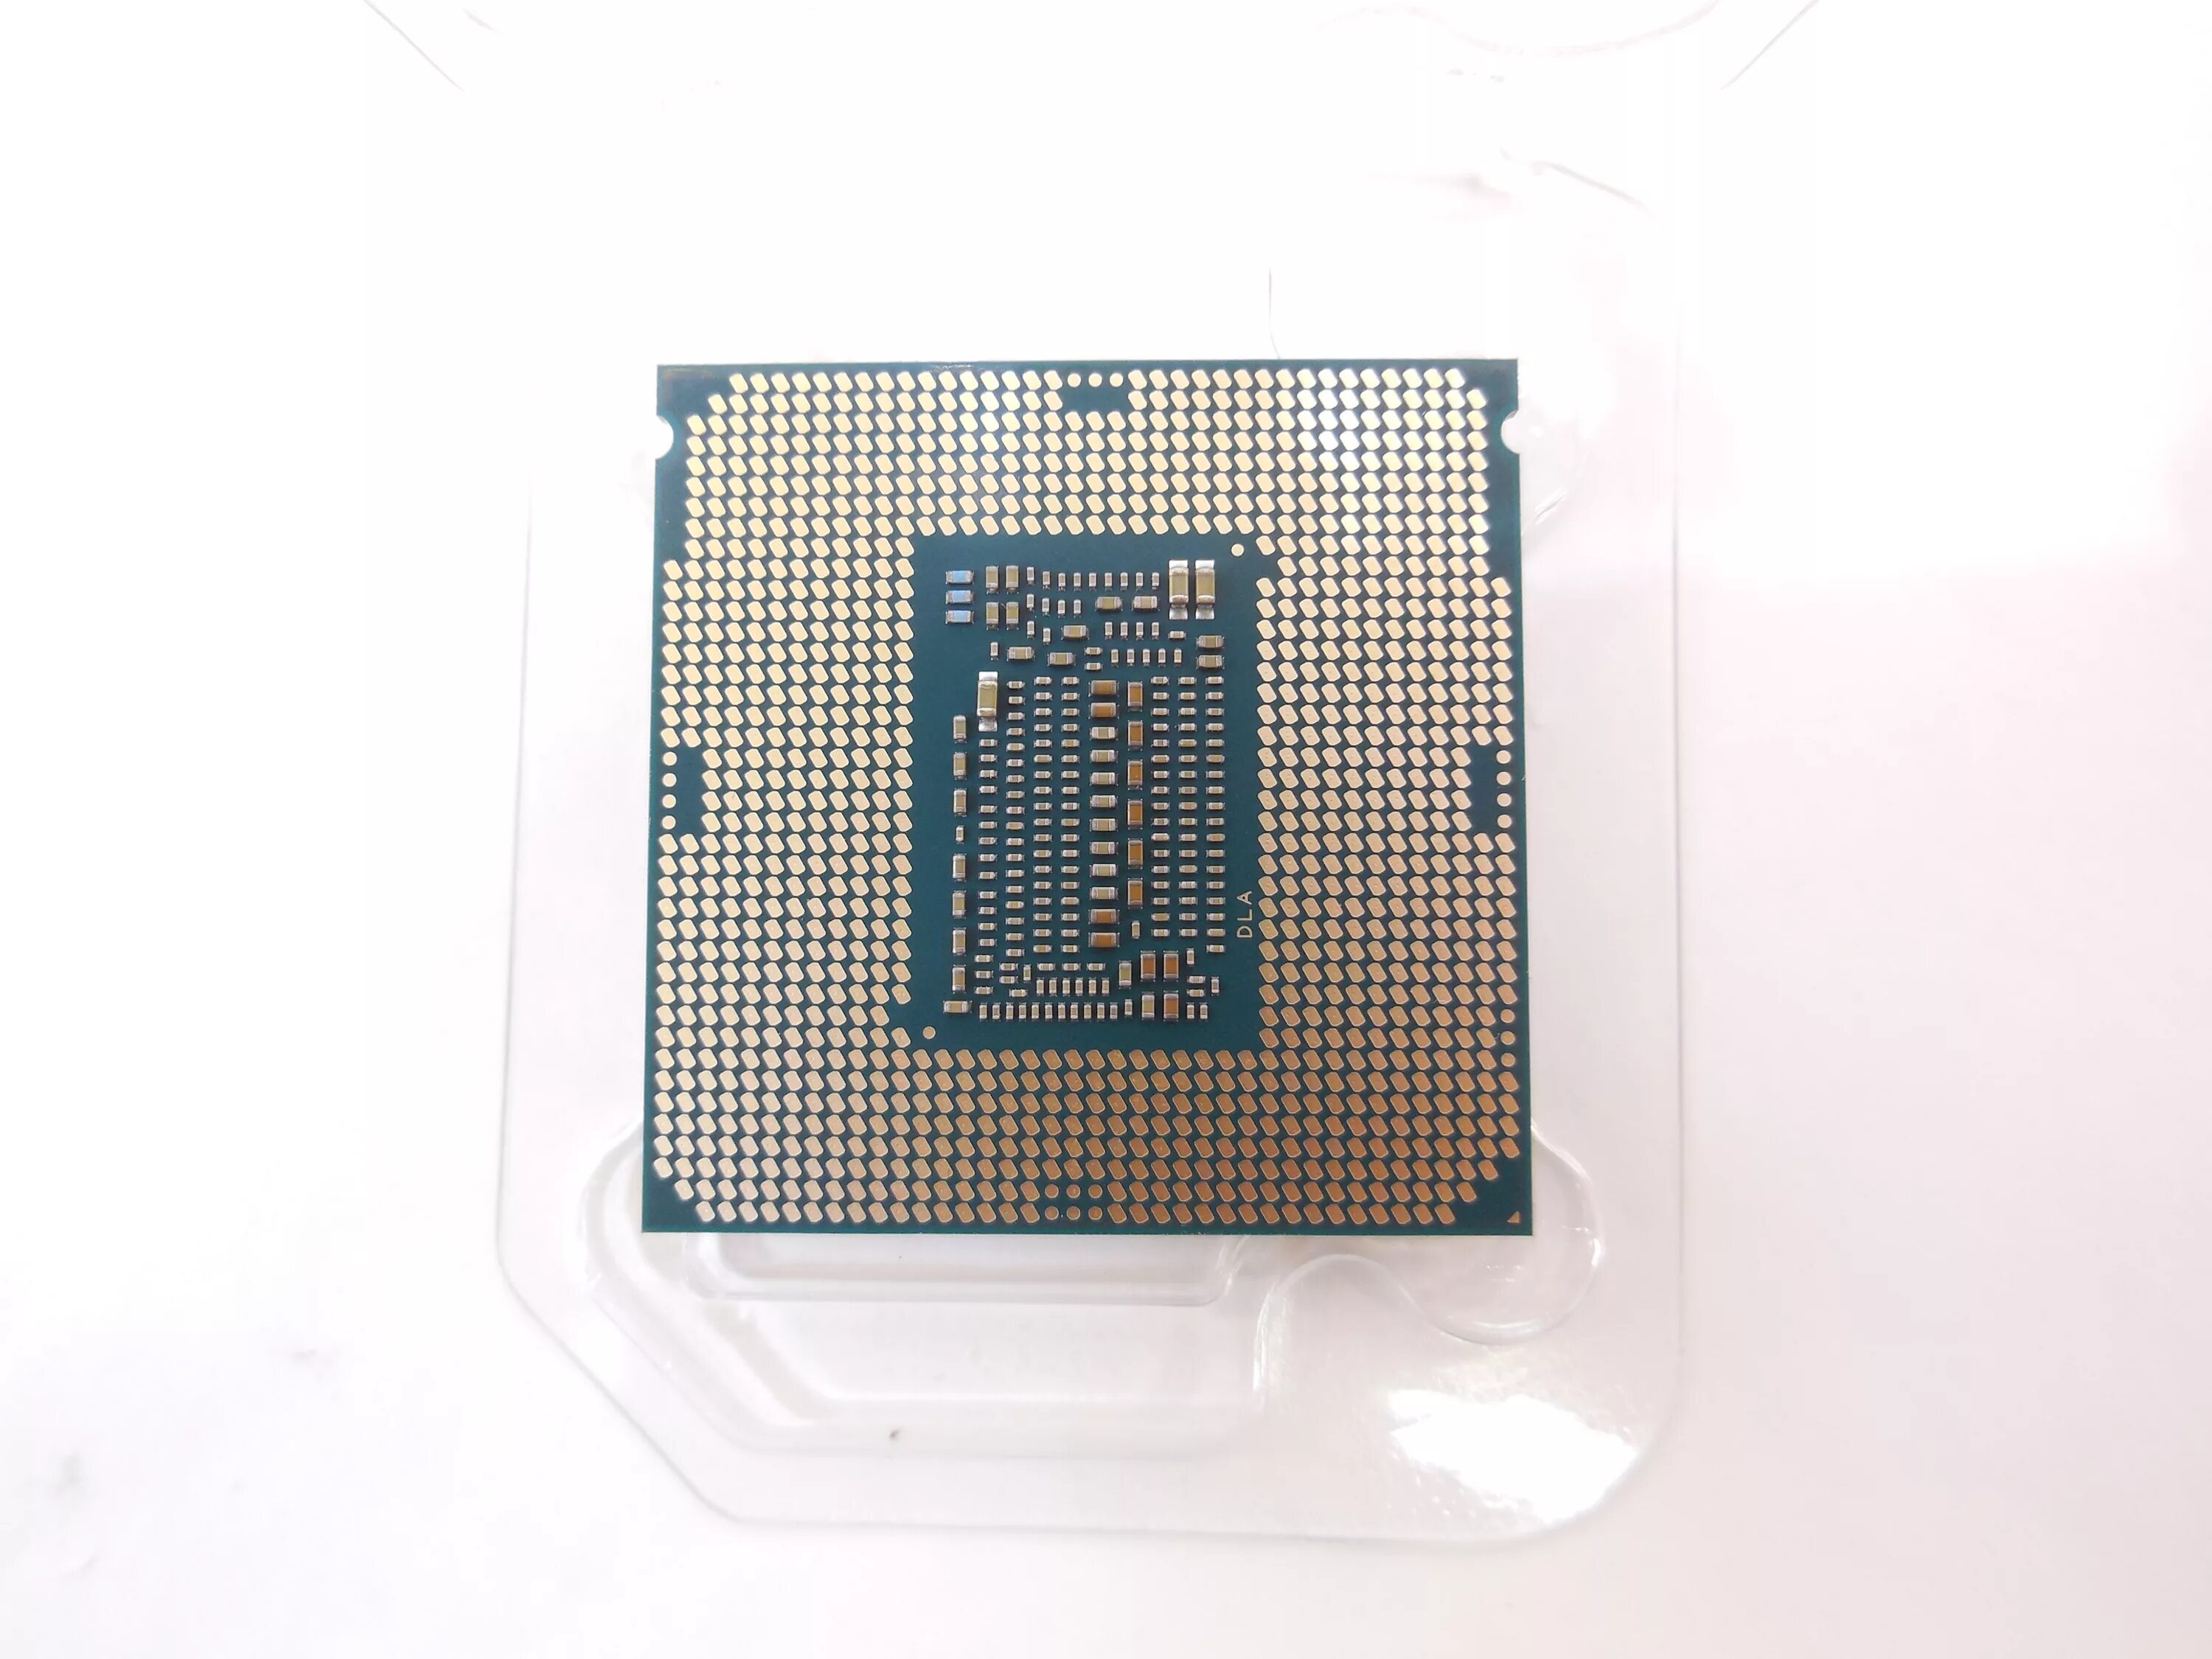 Процессор интел коре i7. Процессор Intel Core i7-9700k. I7 9700k. Intel Core i7-9700 (OEM). Intel Core i7 9700 CPU.